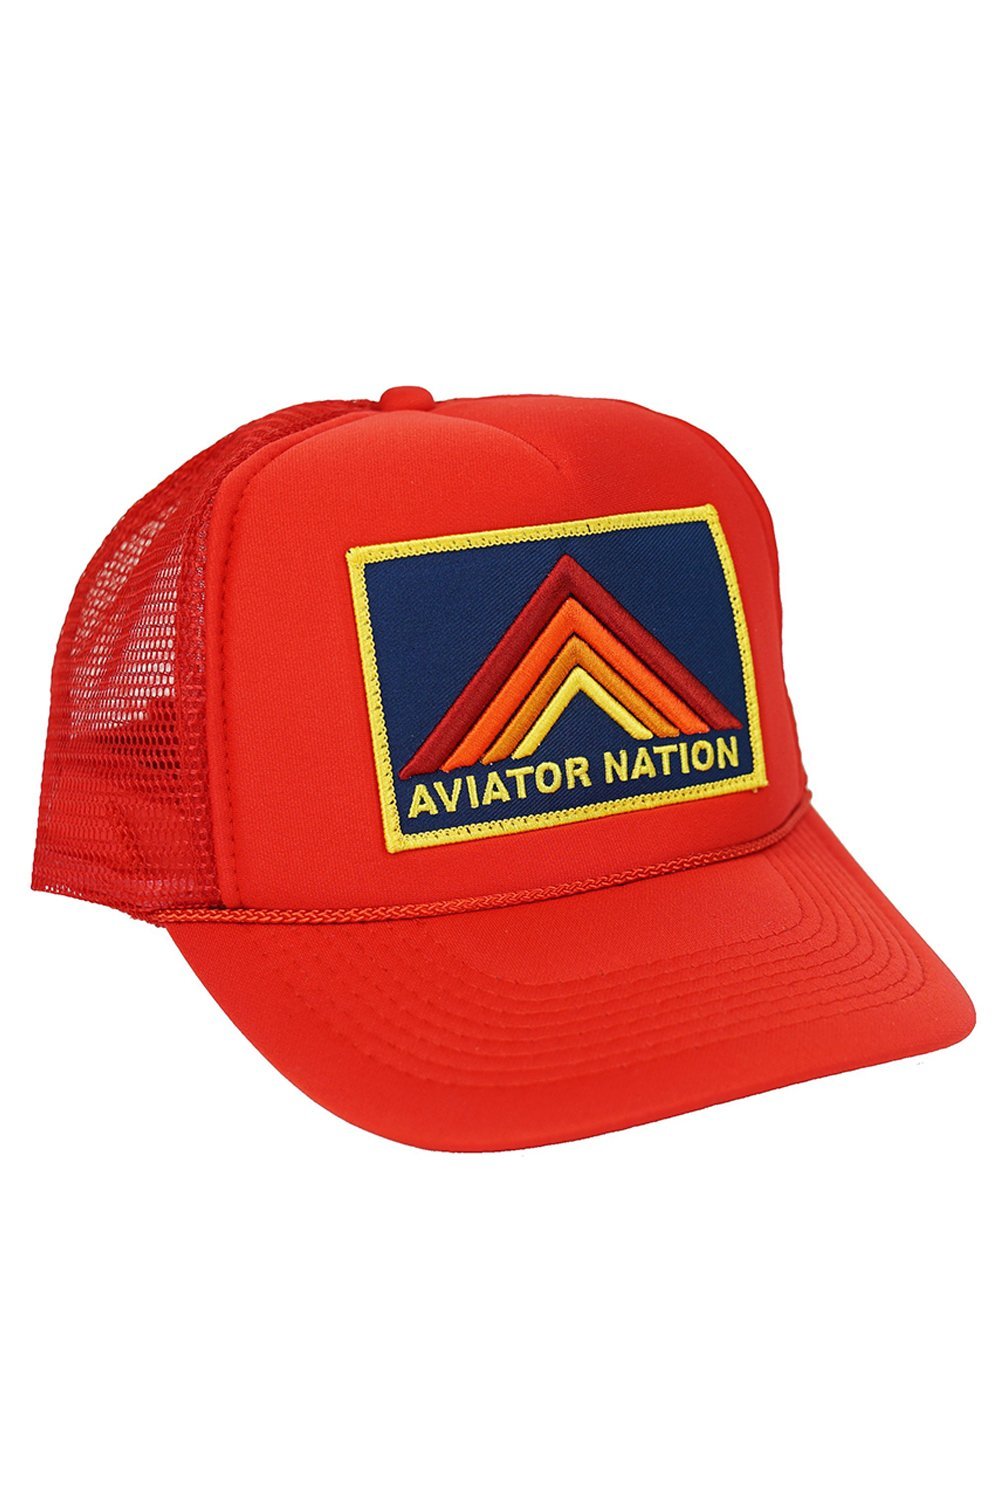 MOUNTAIN STRIPE VINTAGE TRUCKER HAT HATS Aviator Nation OS RED 